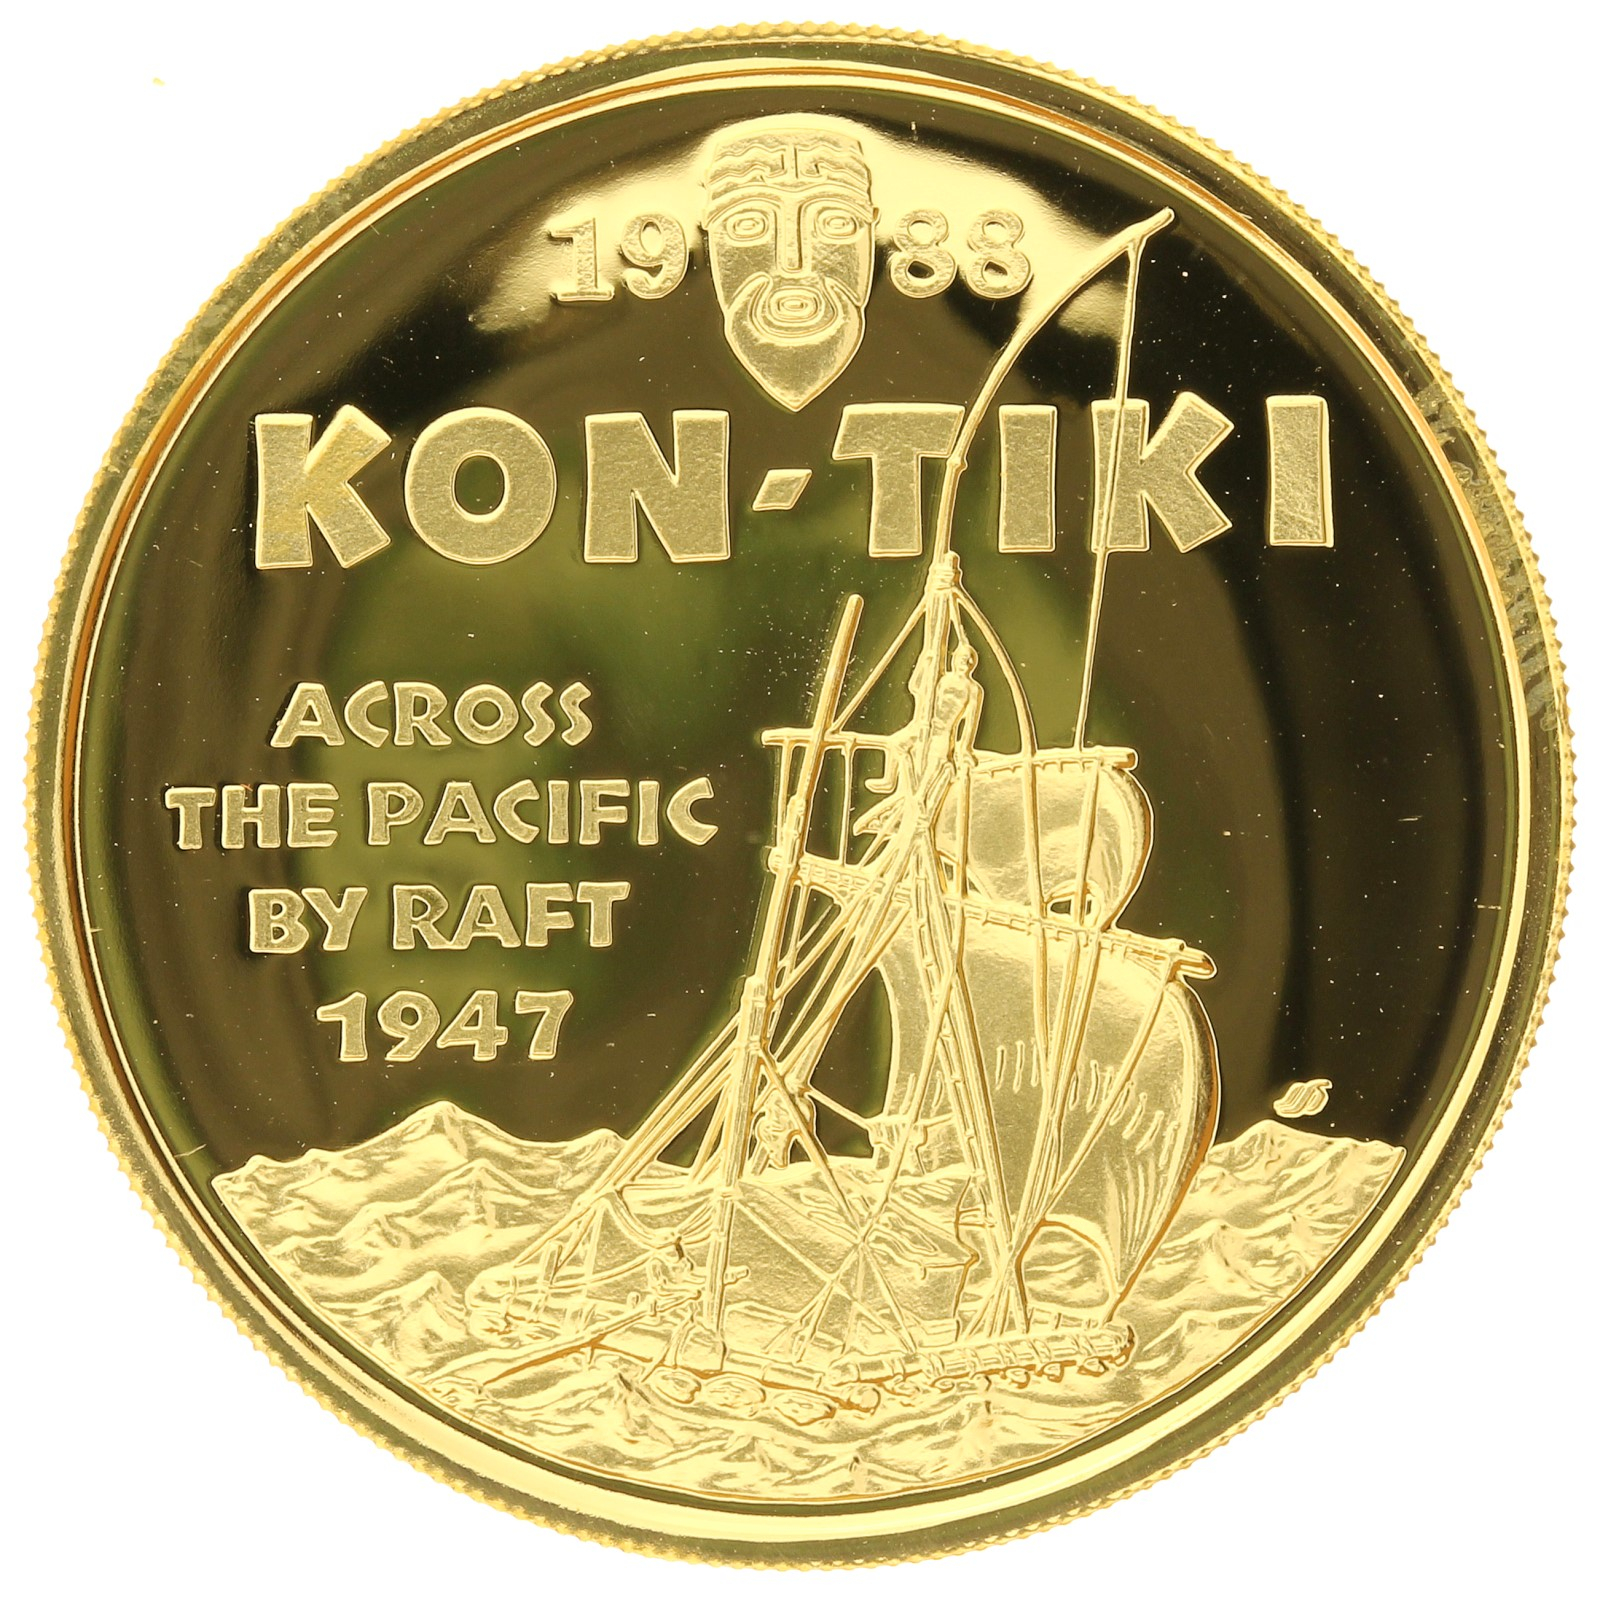 Samoa - 100 Tala - 1988 - Tanumafili II - Kon-Tiki